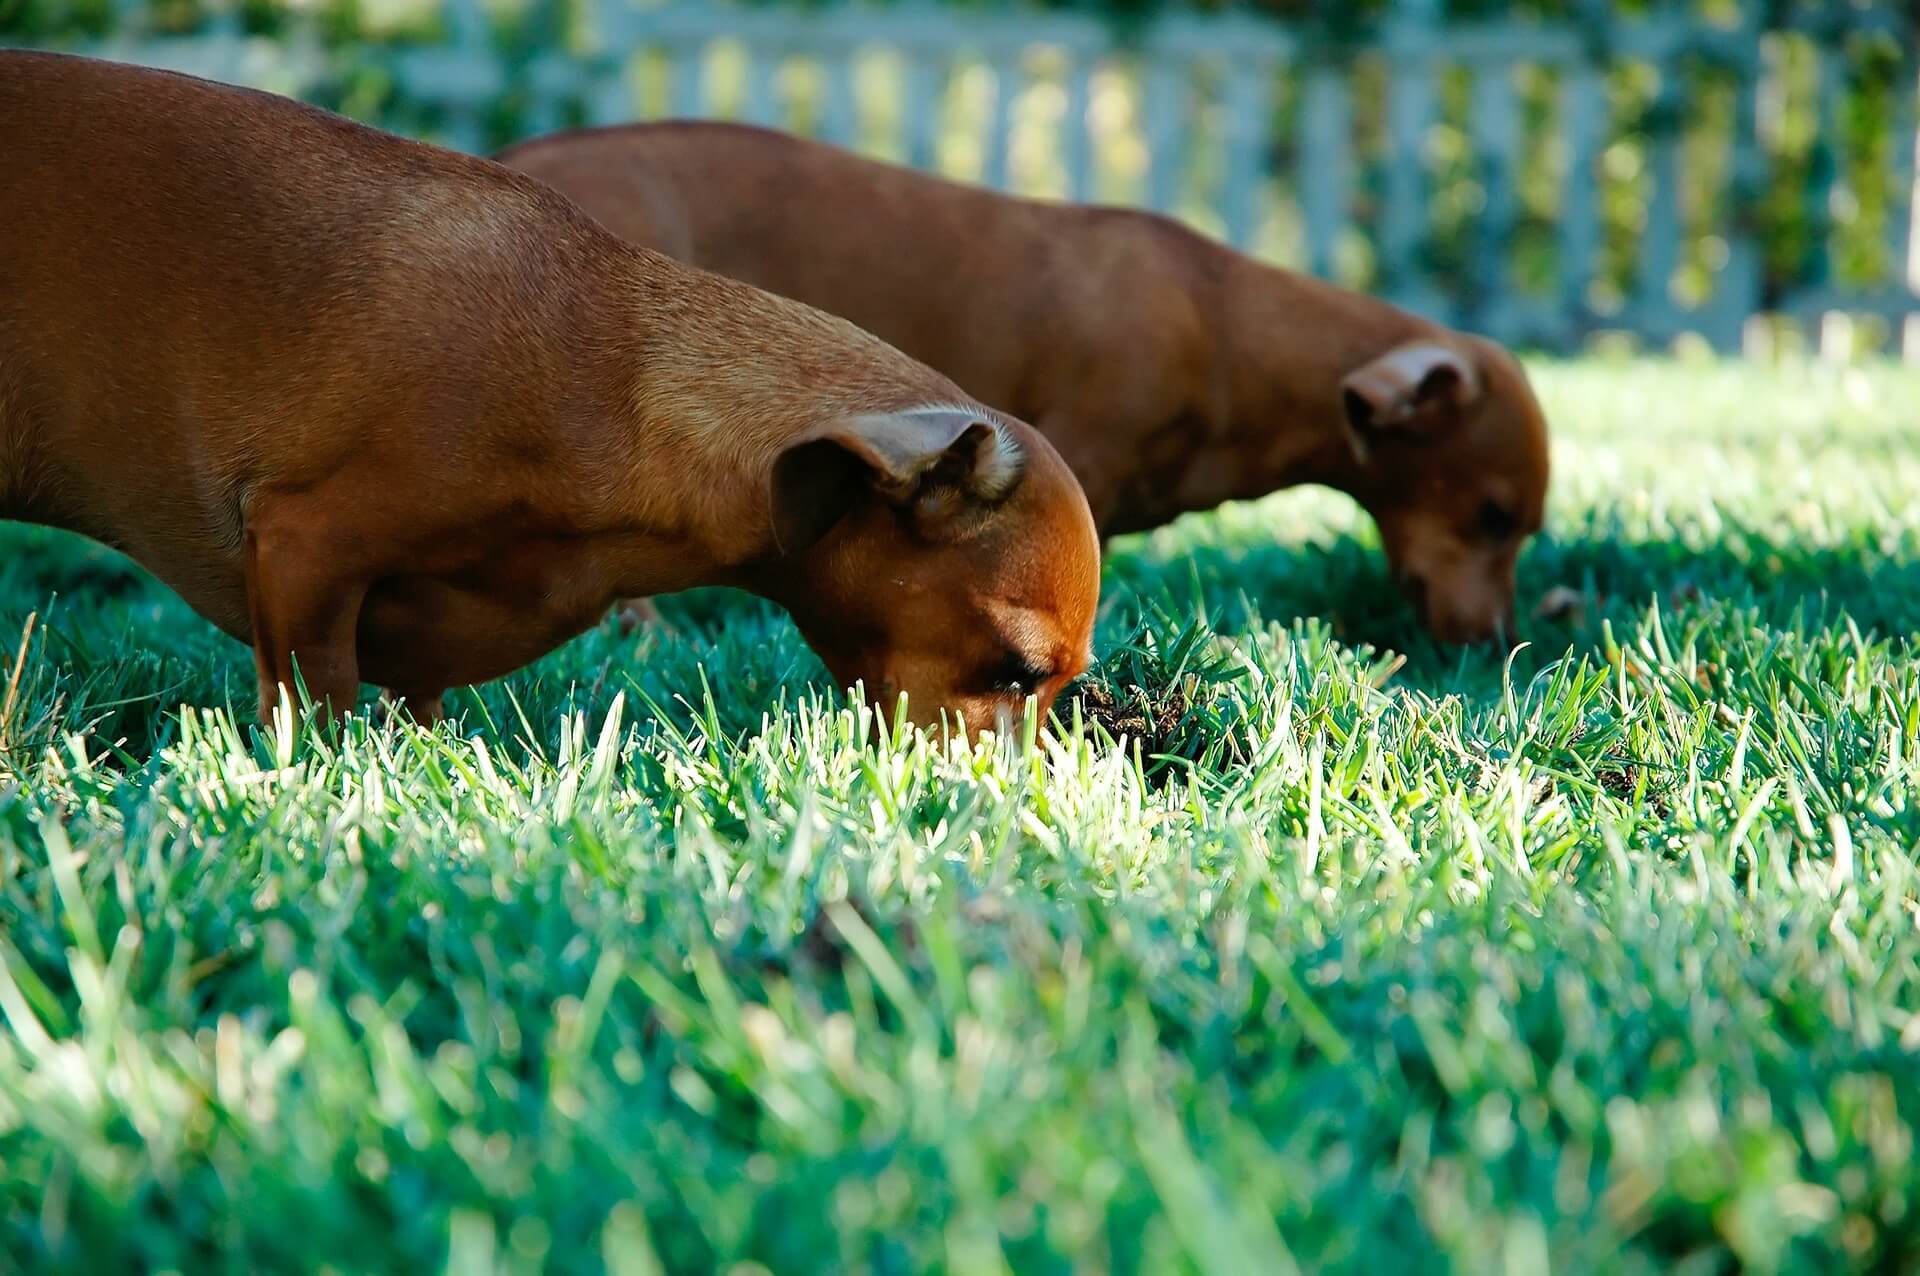 Dog in Grass